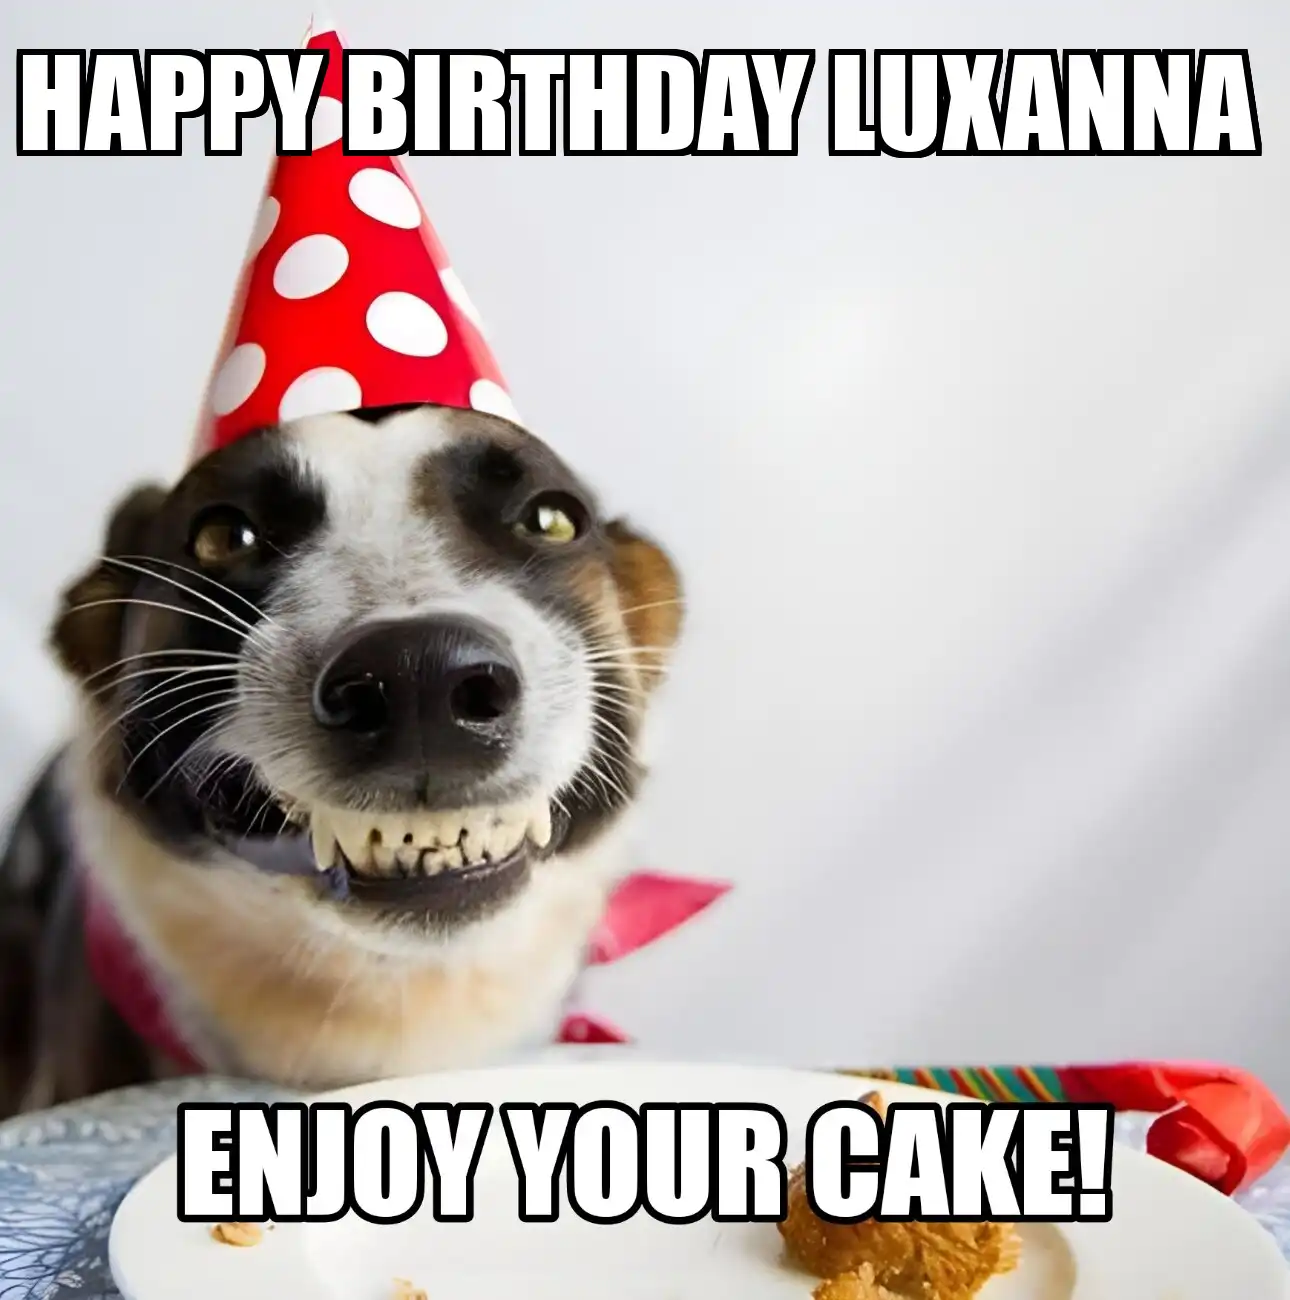 Happy Birthday Luxanna Enjoy Your Cake Dog Meme